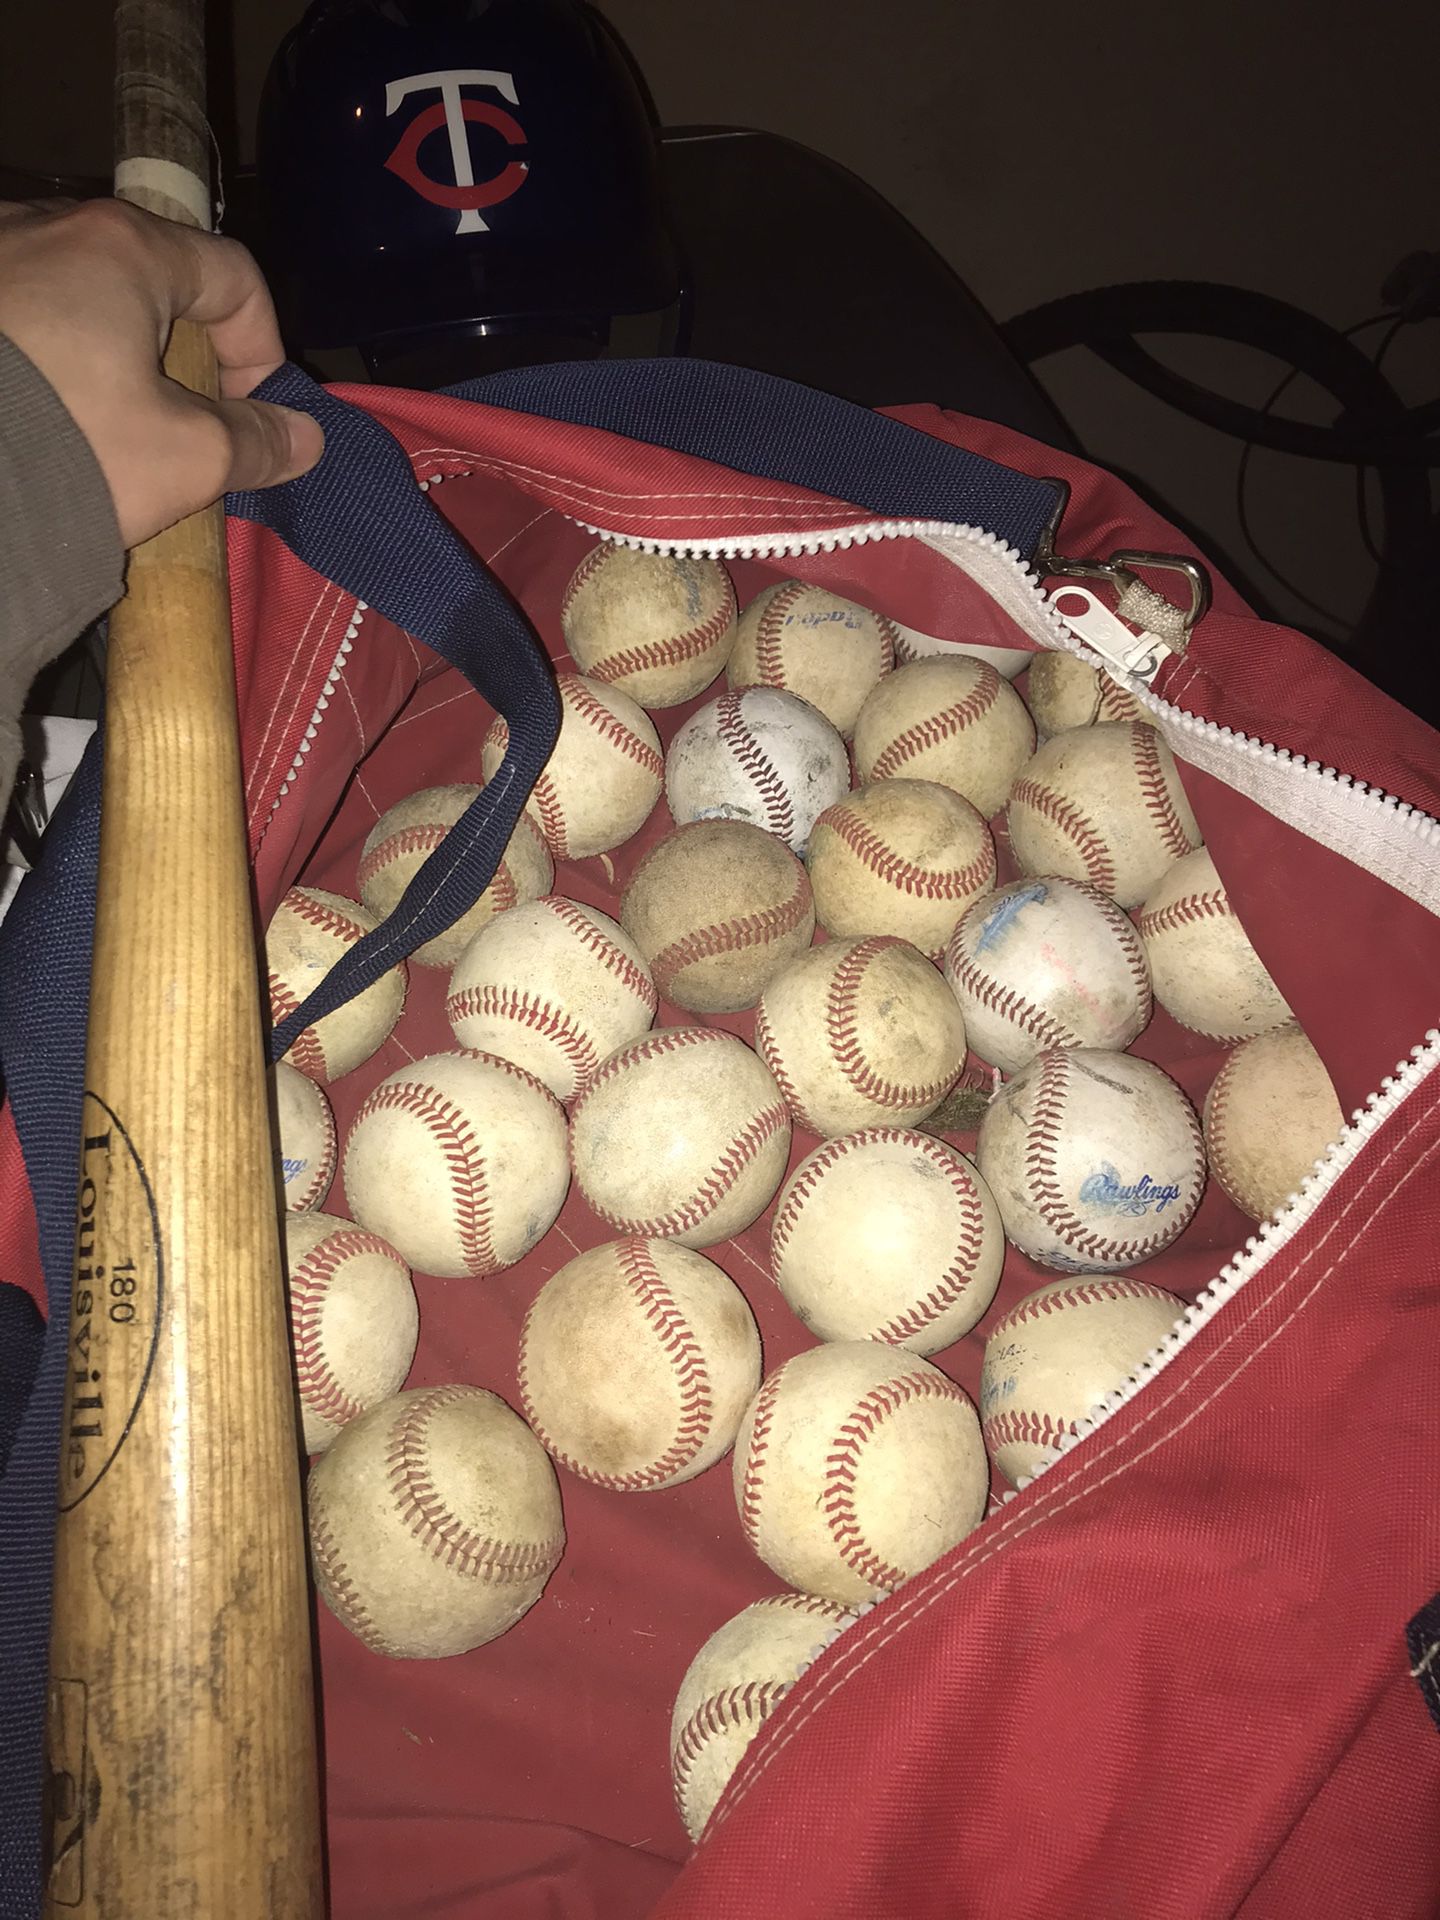 Big Bag Of Baseball Stuff.